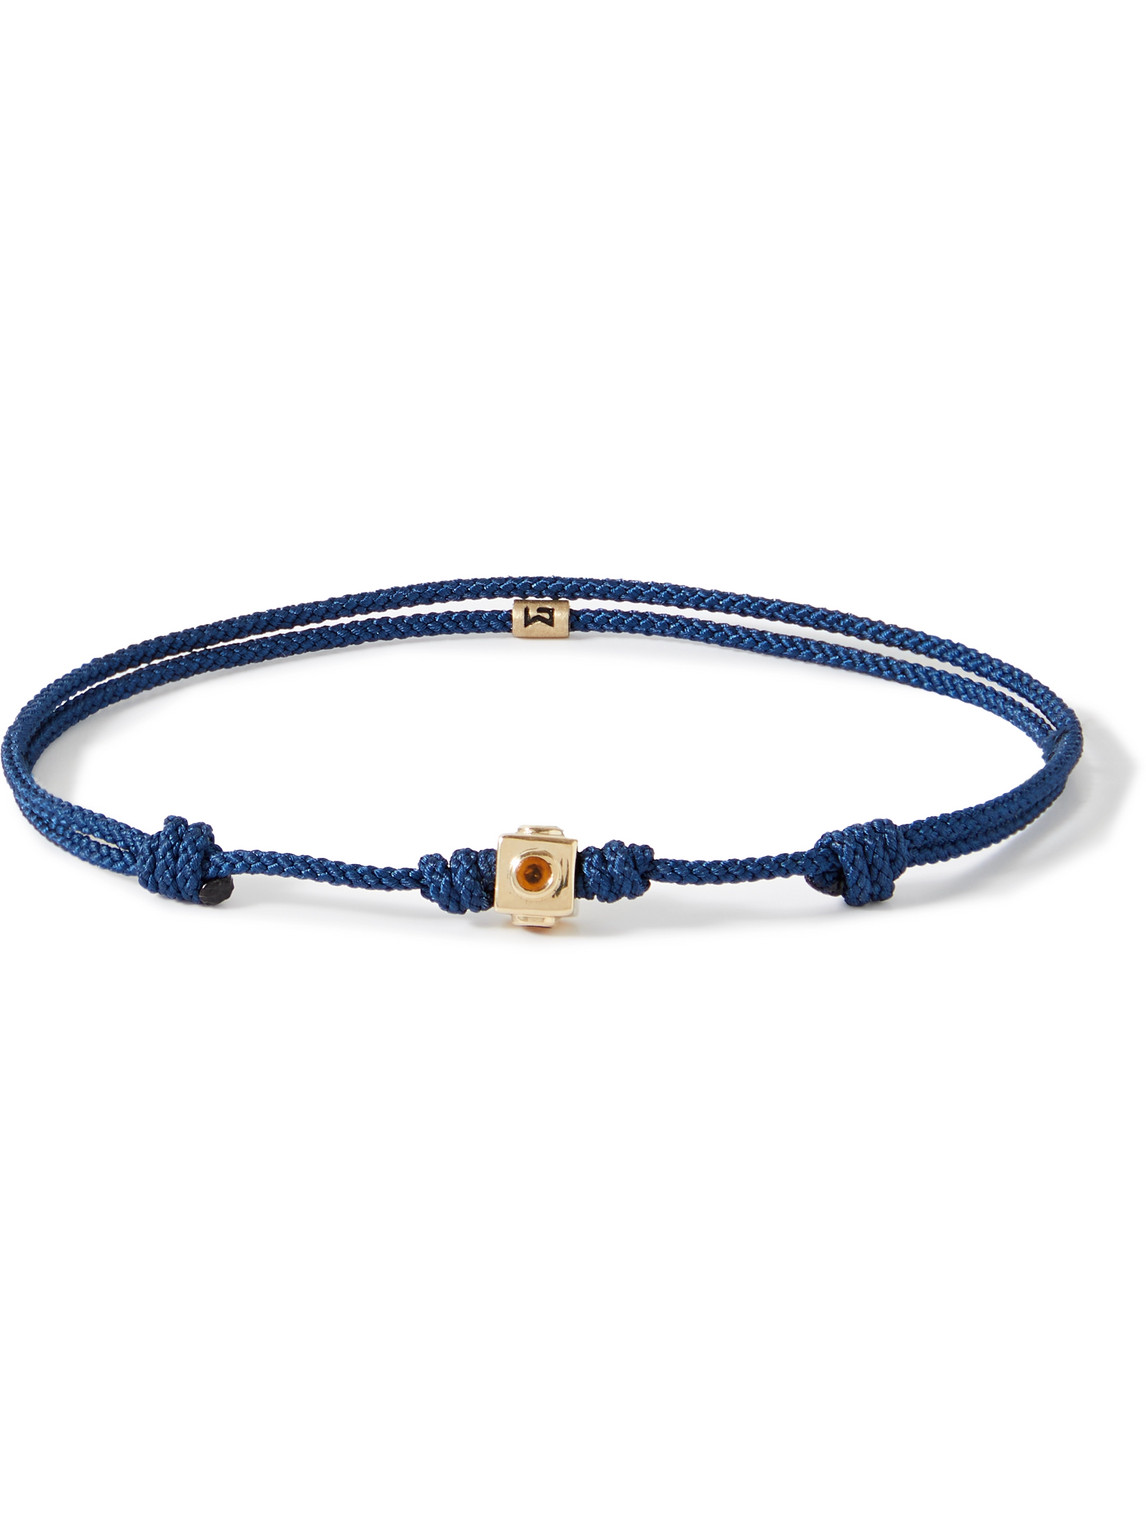 Luis Morais Gold, Smoky Quartz And Cord Bracelet In Blue